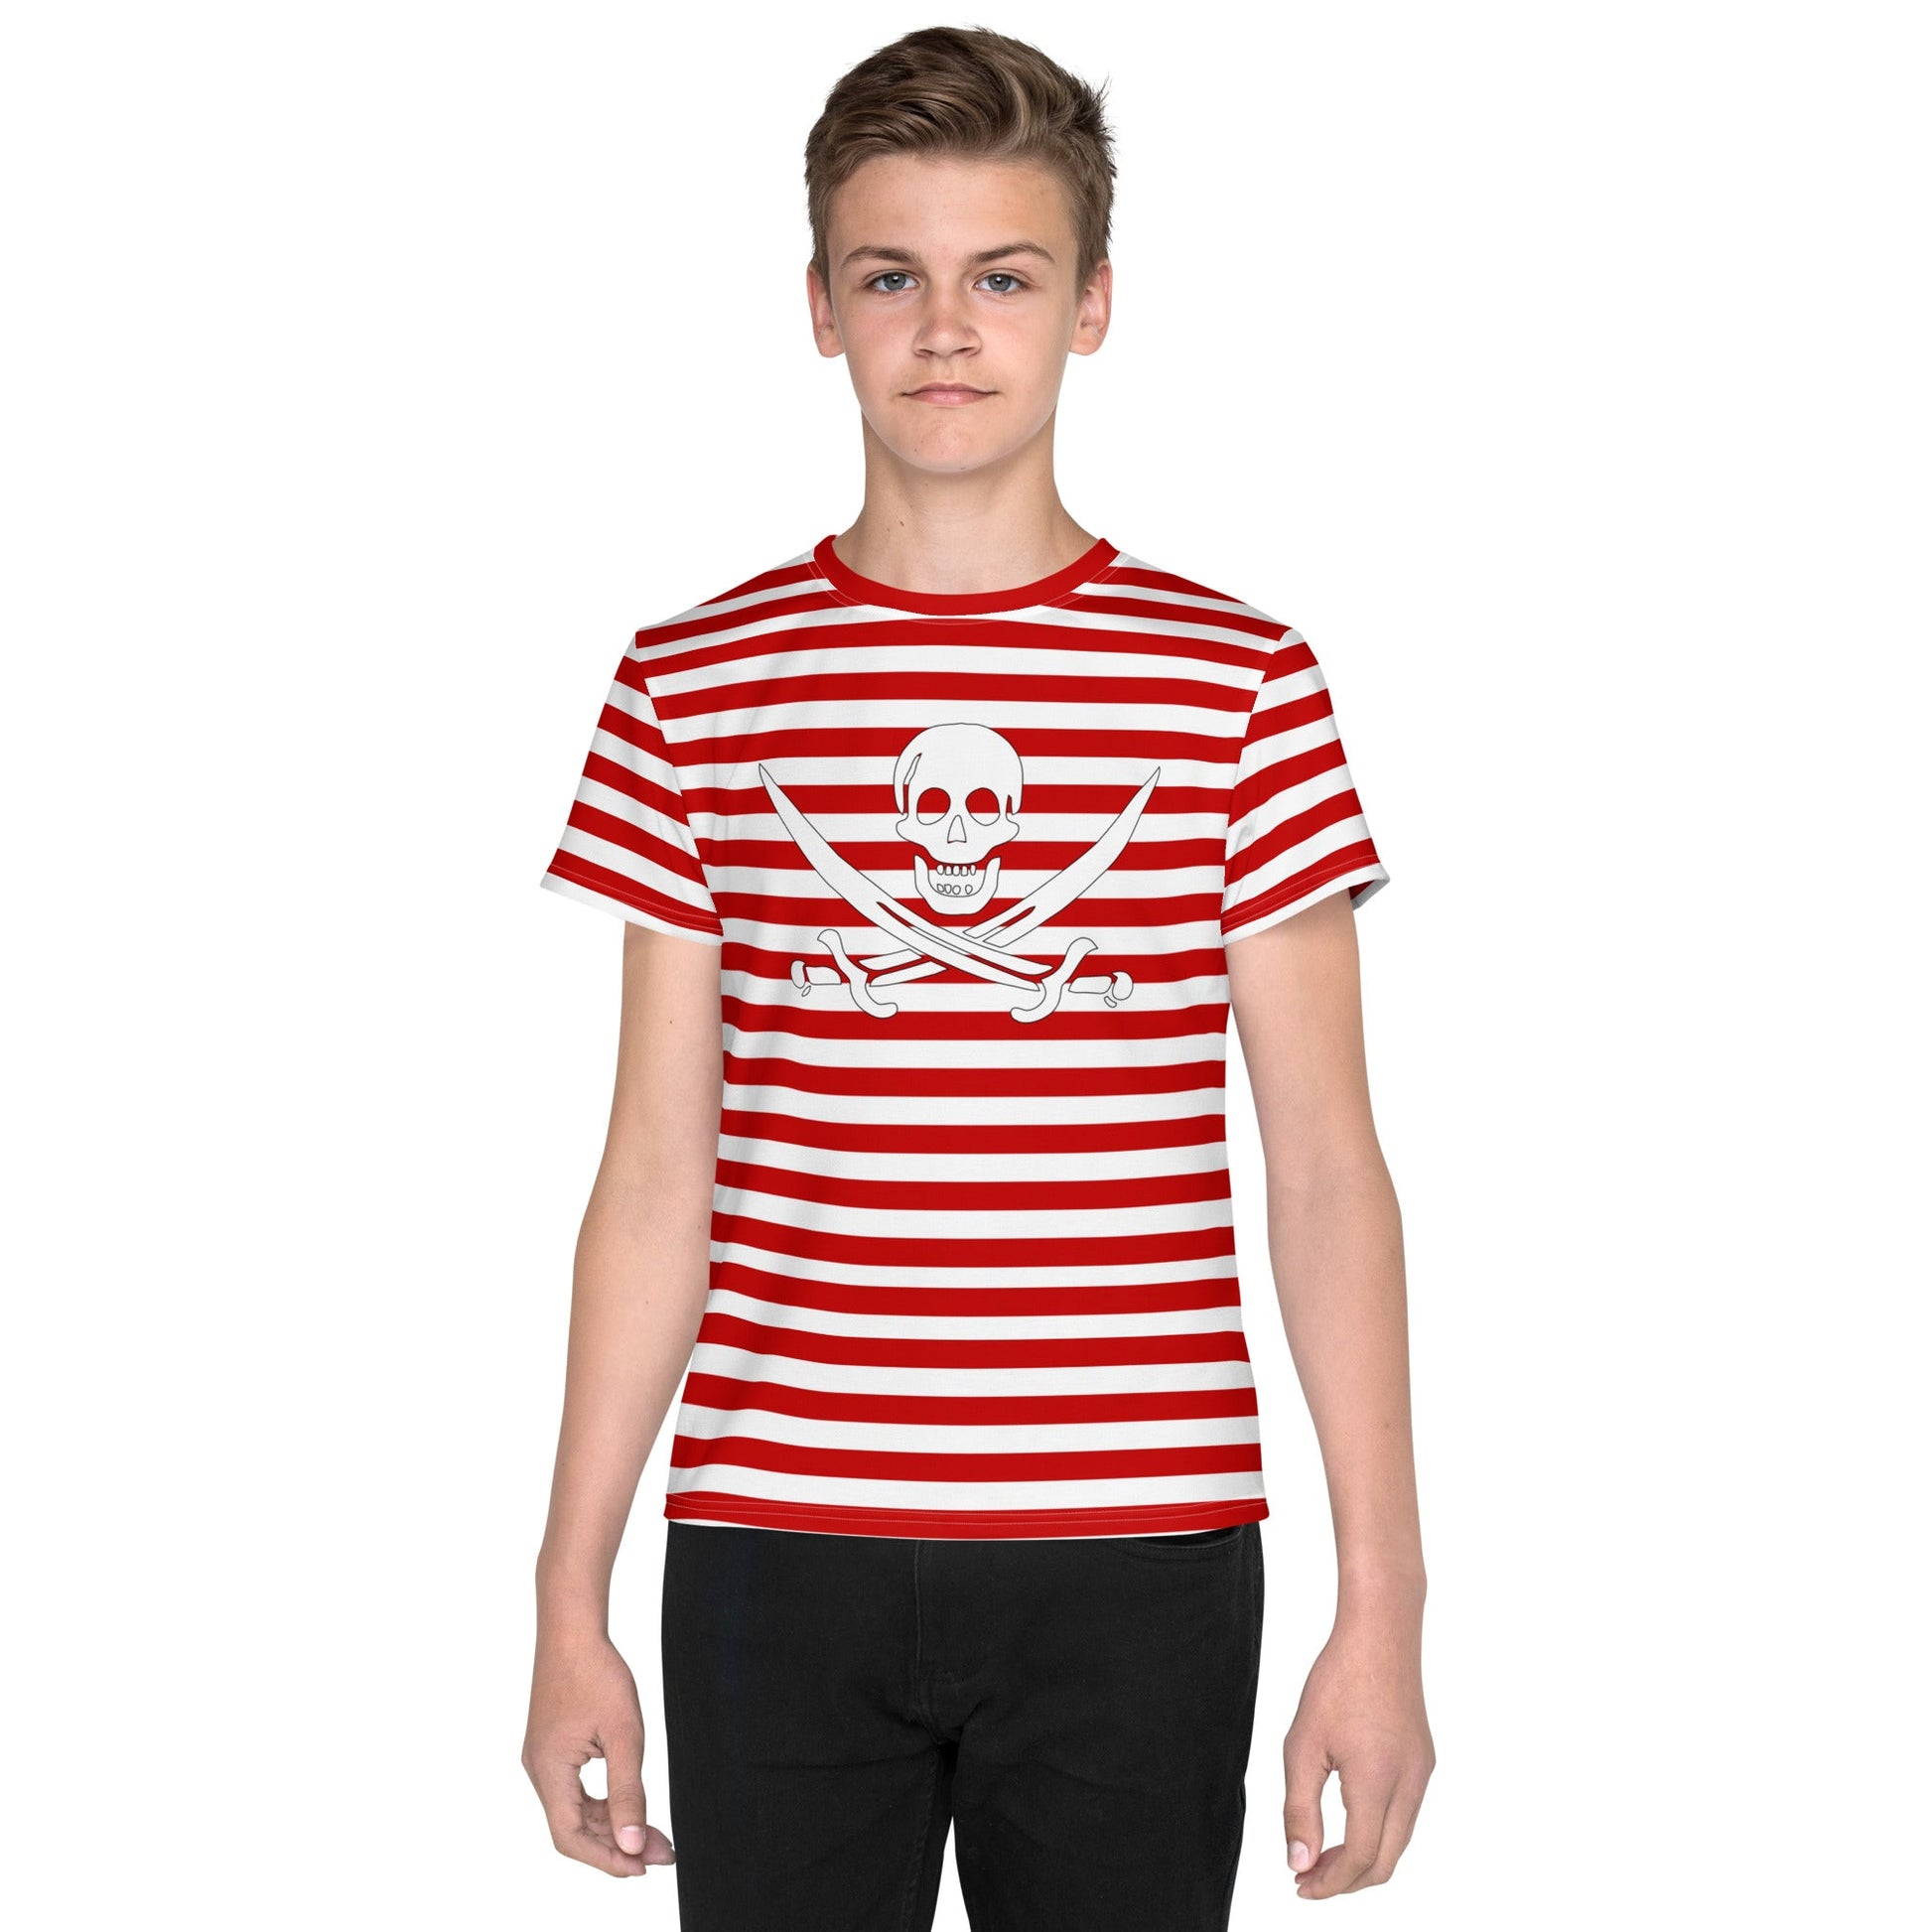 Pirate Night Youth crew neck t-shirt disney boundingdisney cosplaydisney costume#tag4##tag5##tag6#